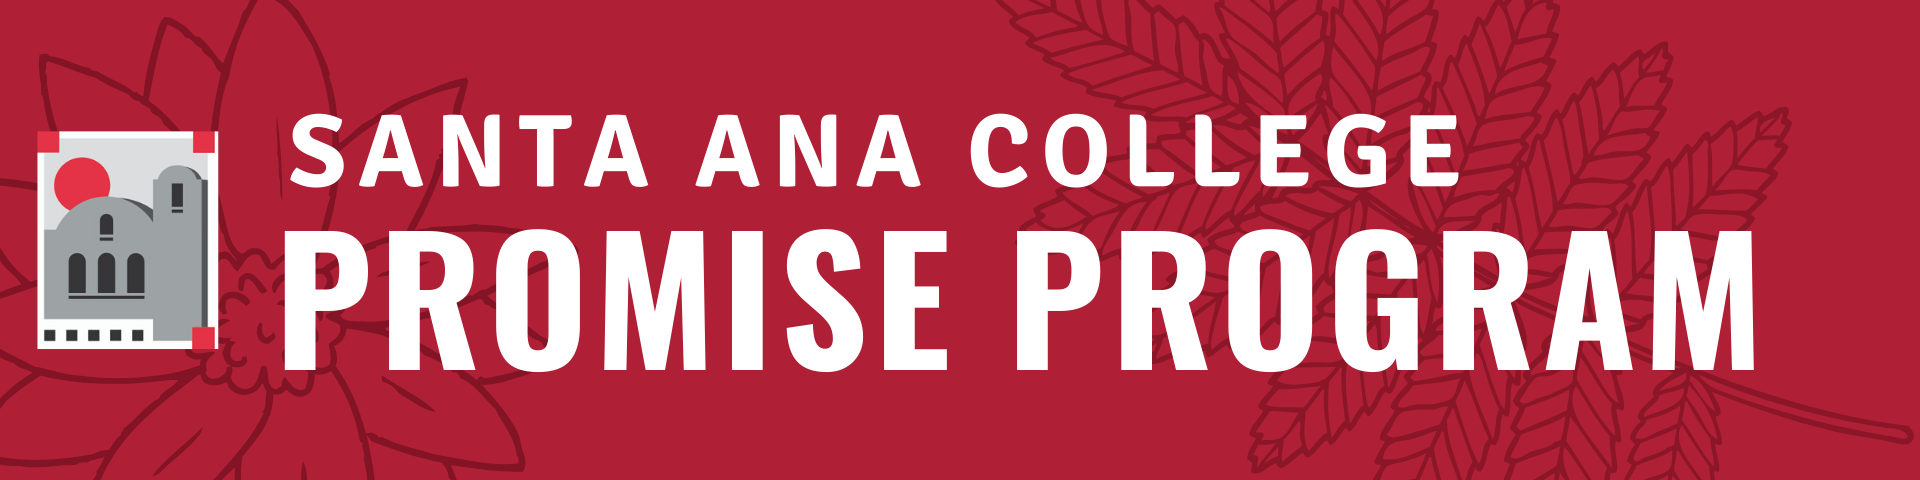 Santa ana college promise program